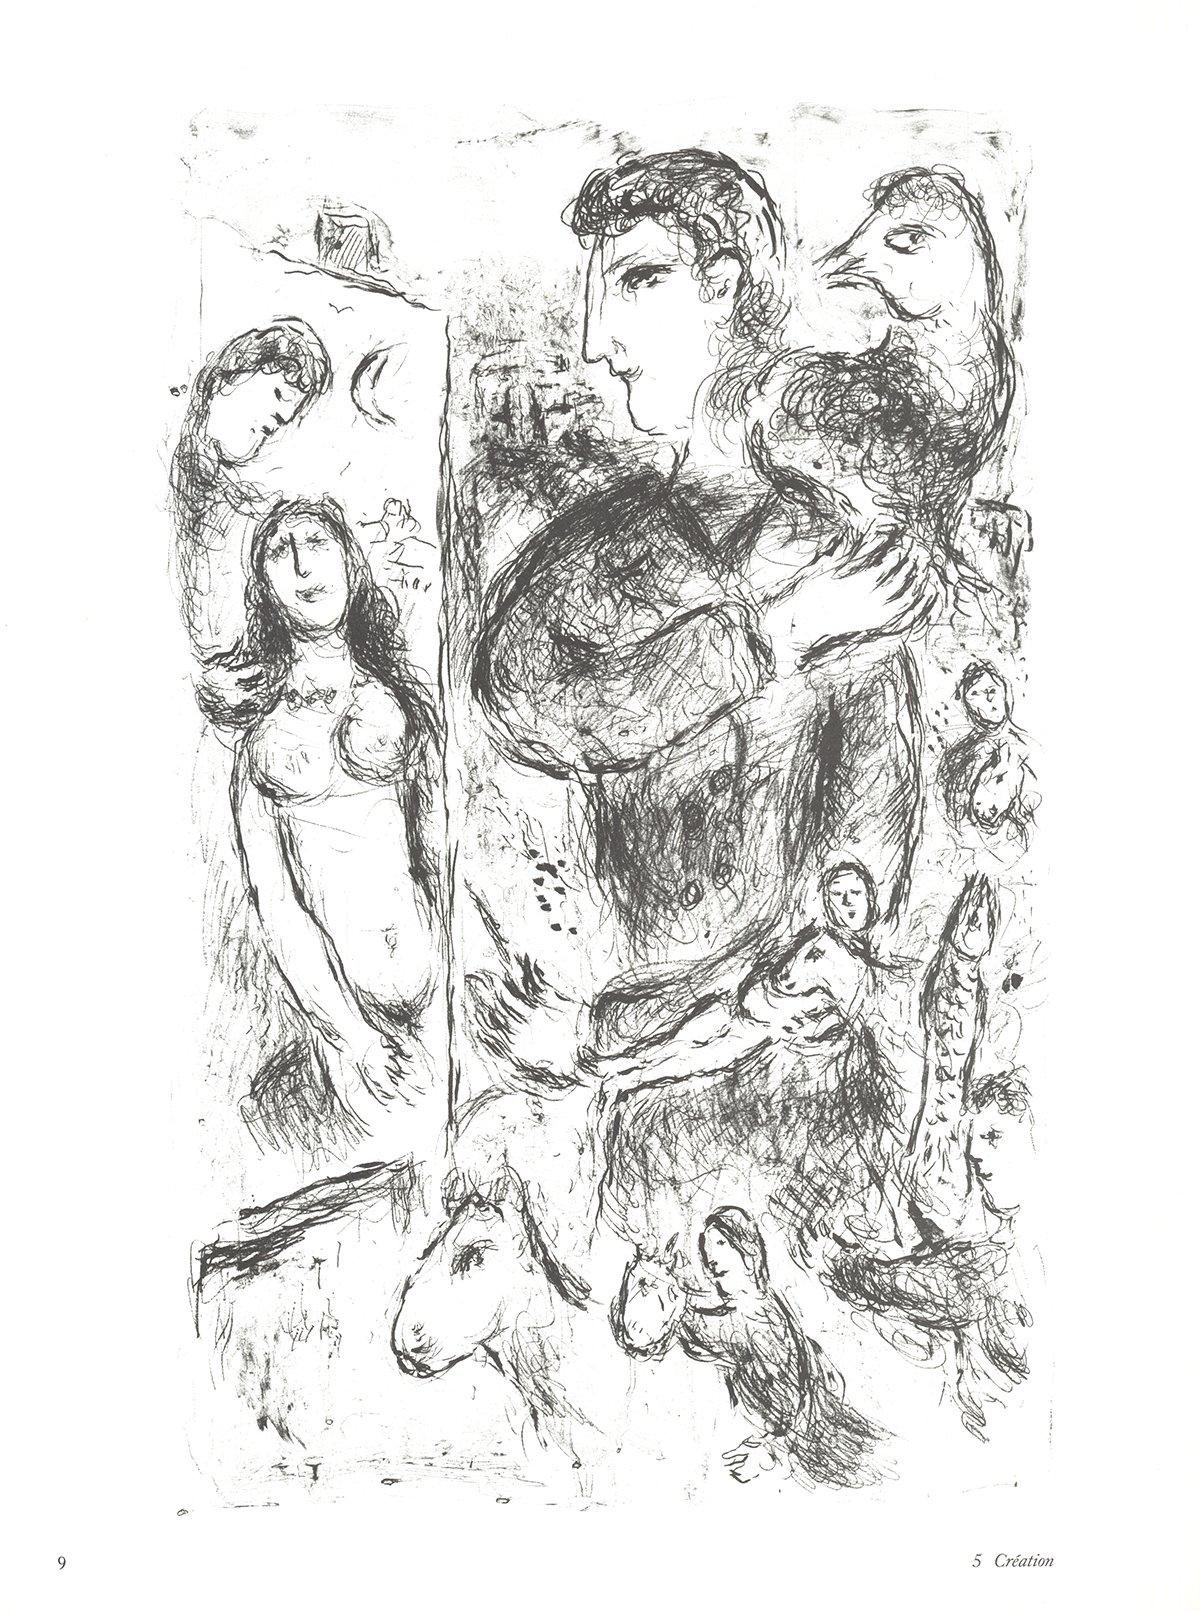 1981 Marc Chagall 'Creation of Man'